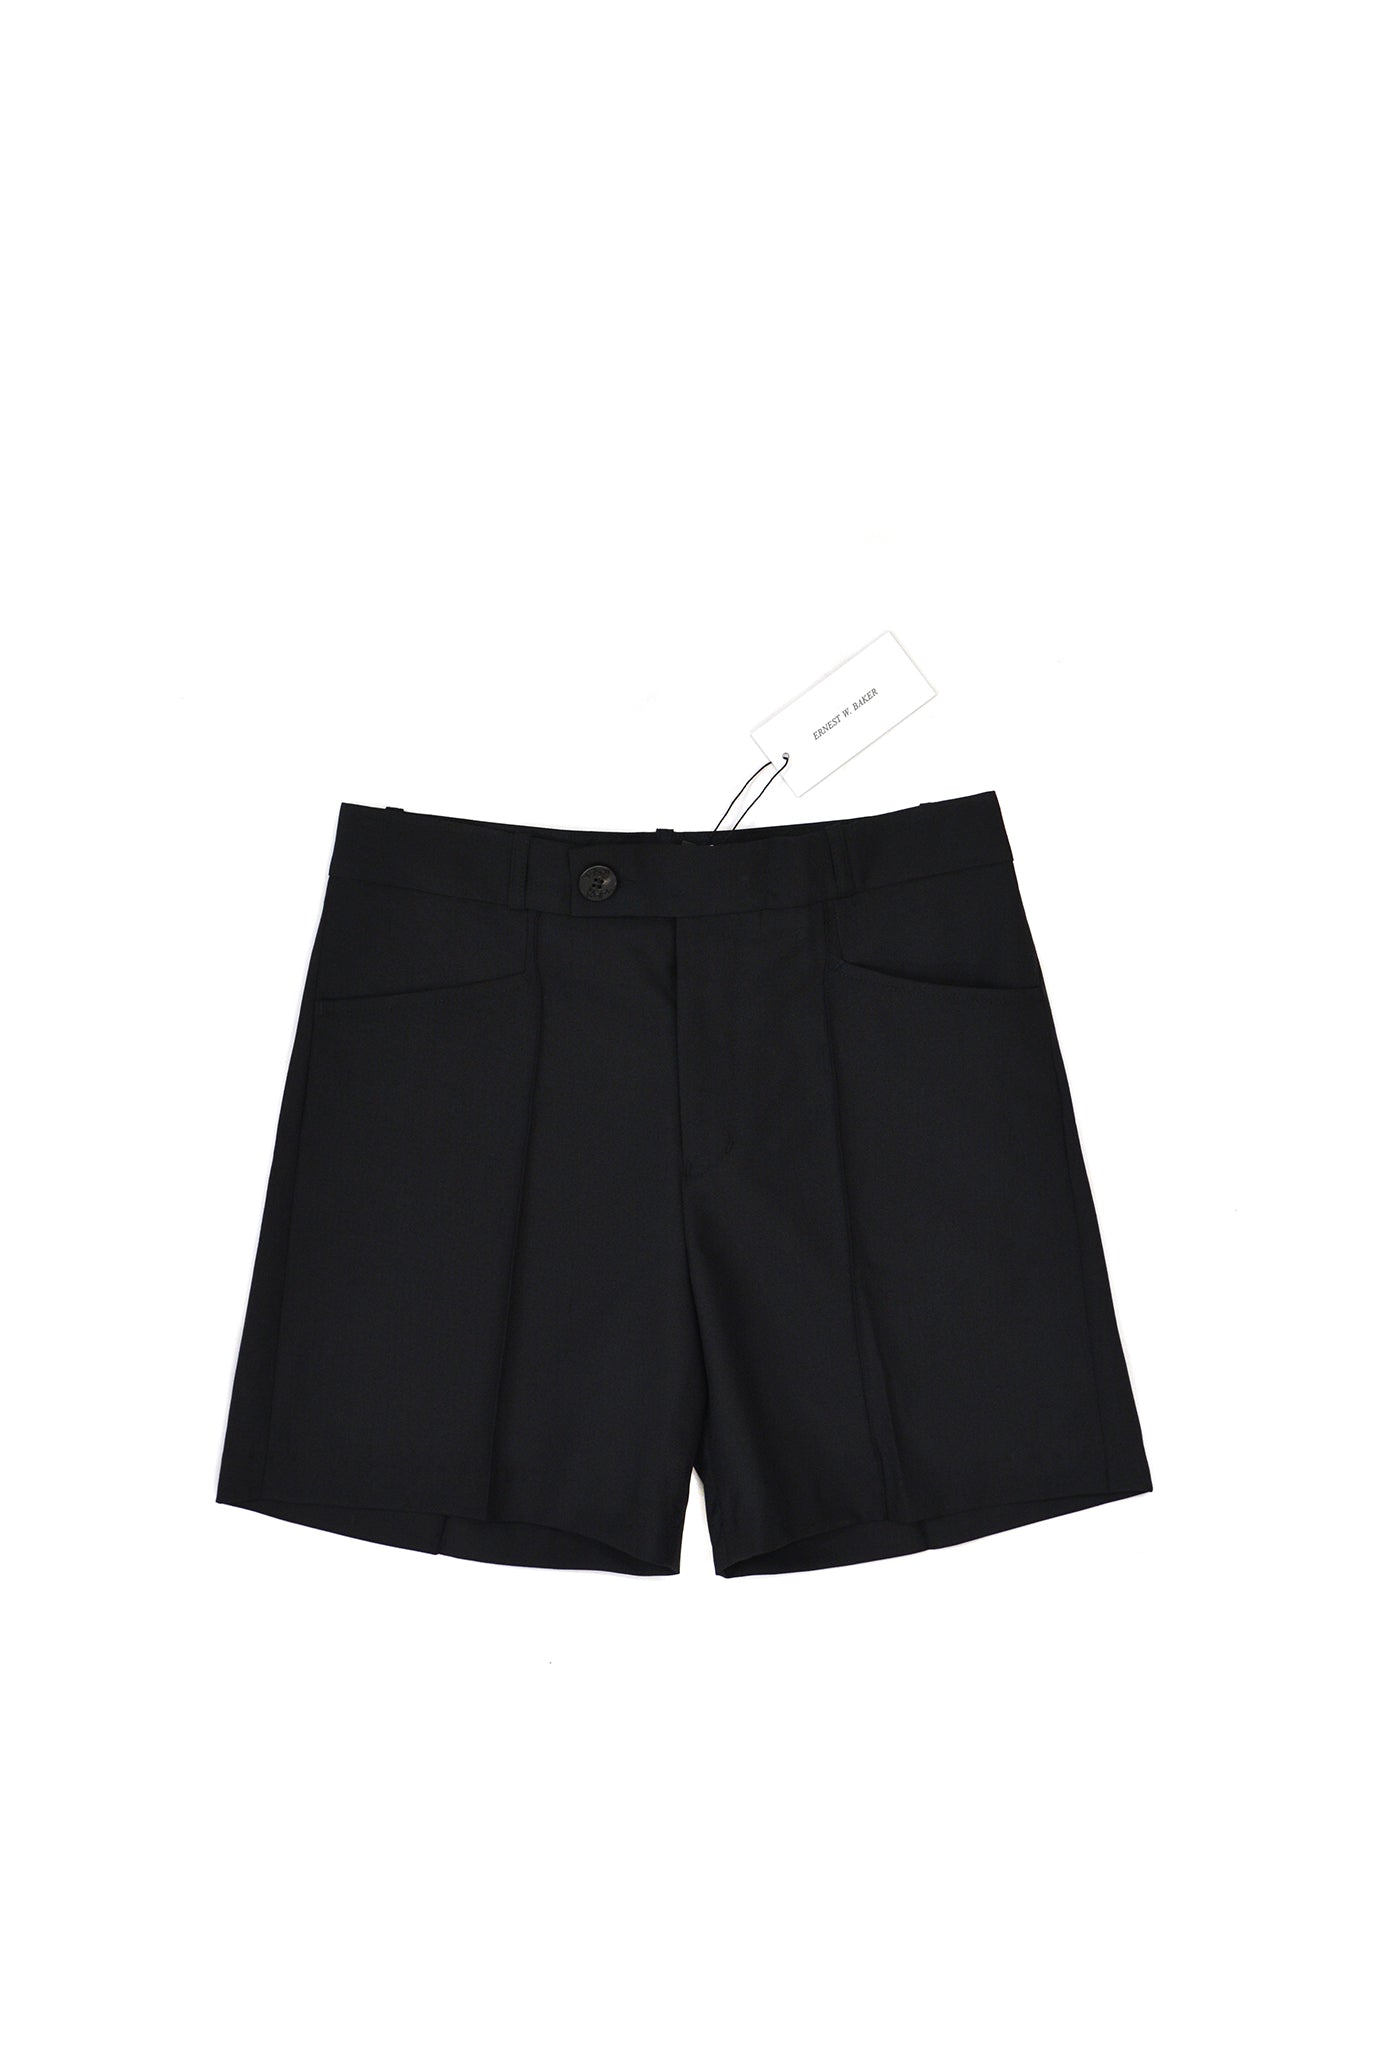 Decoy Seamless shorts, BLACK • Price 17.1 €